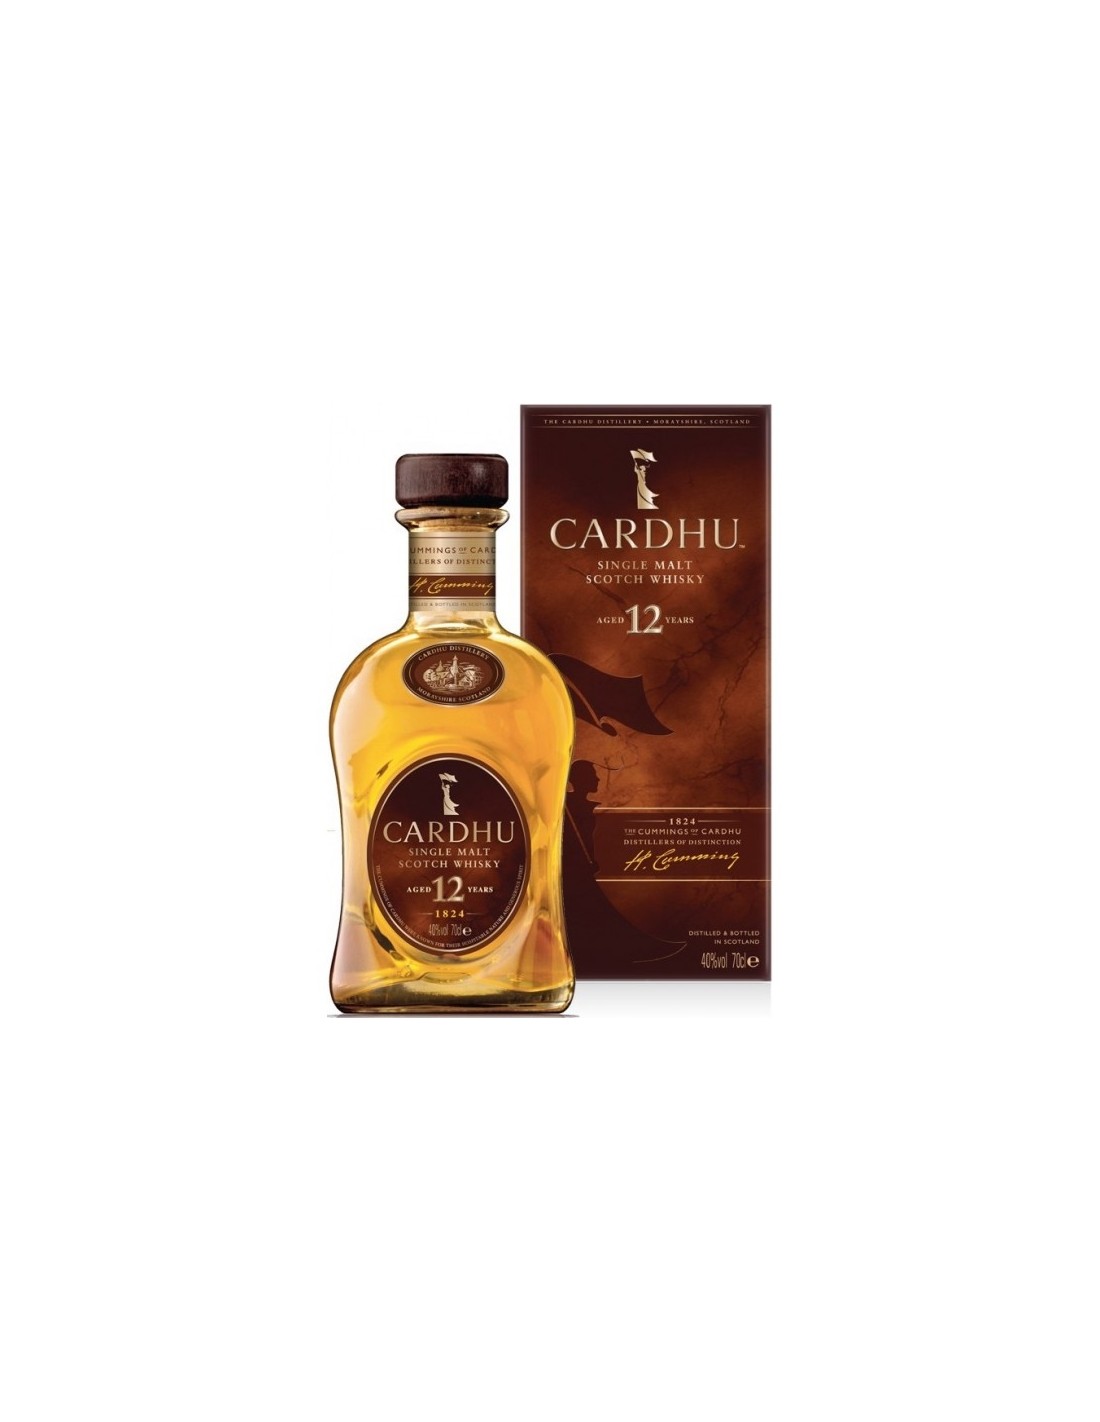 Whisky Cardhu, 0.7L, 12 ani, 40% alc., Scotia alcooldiscount.ro